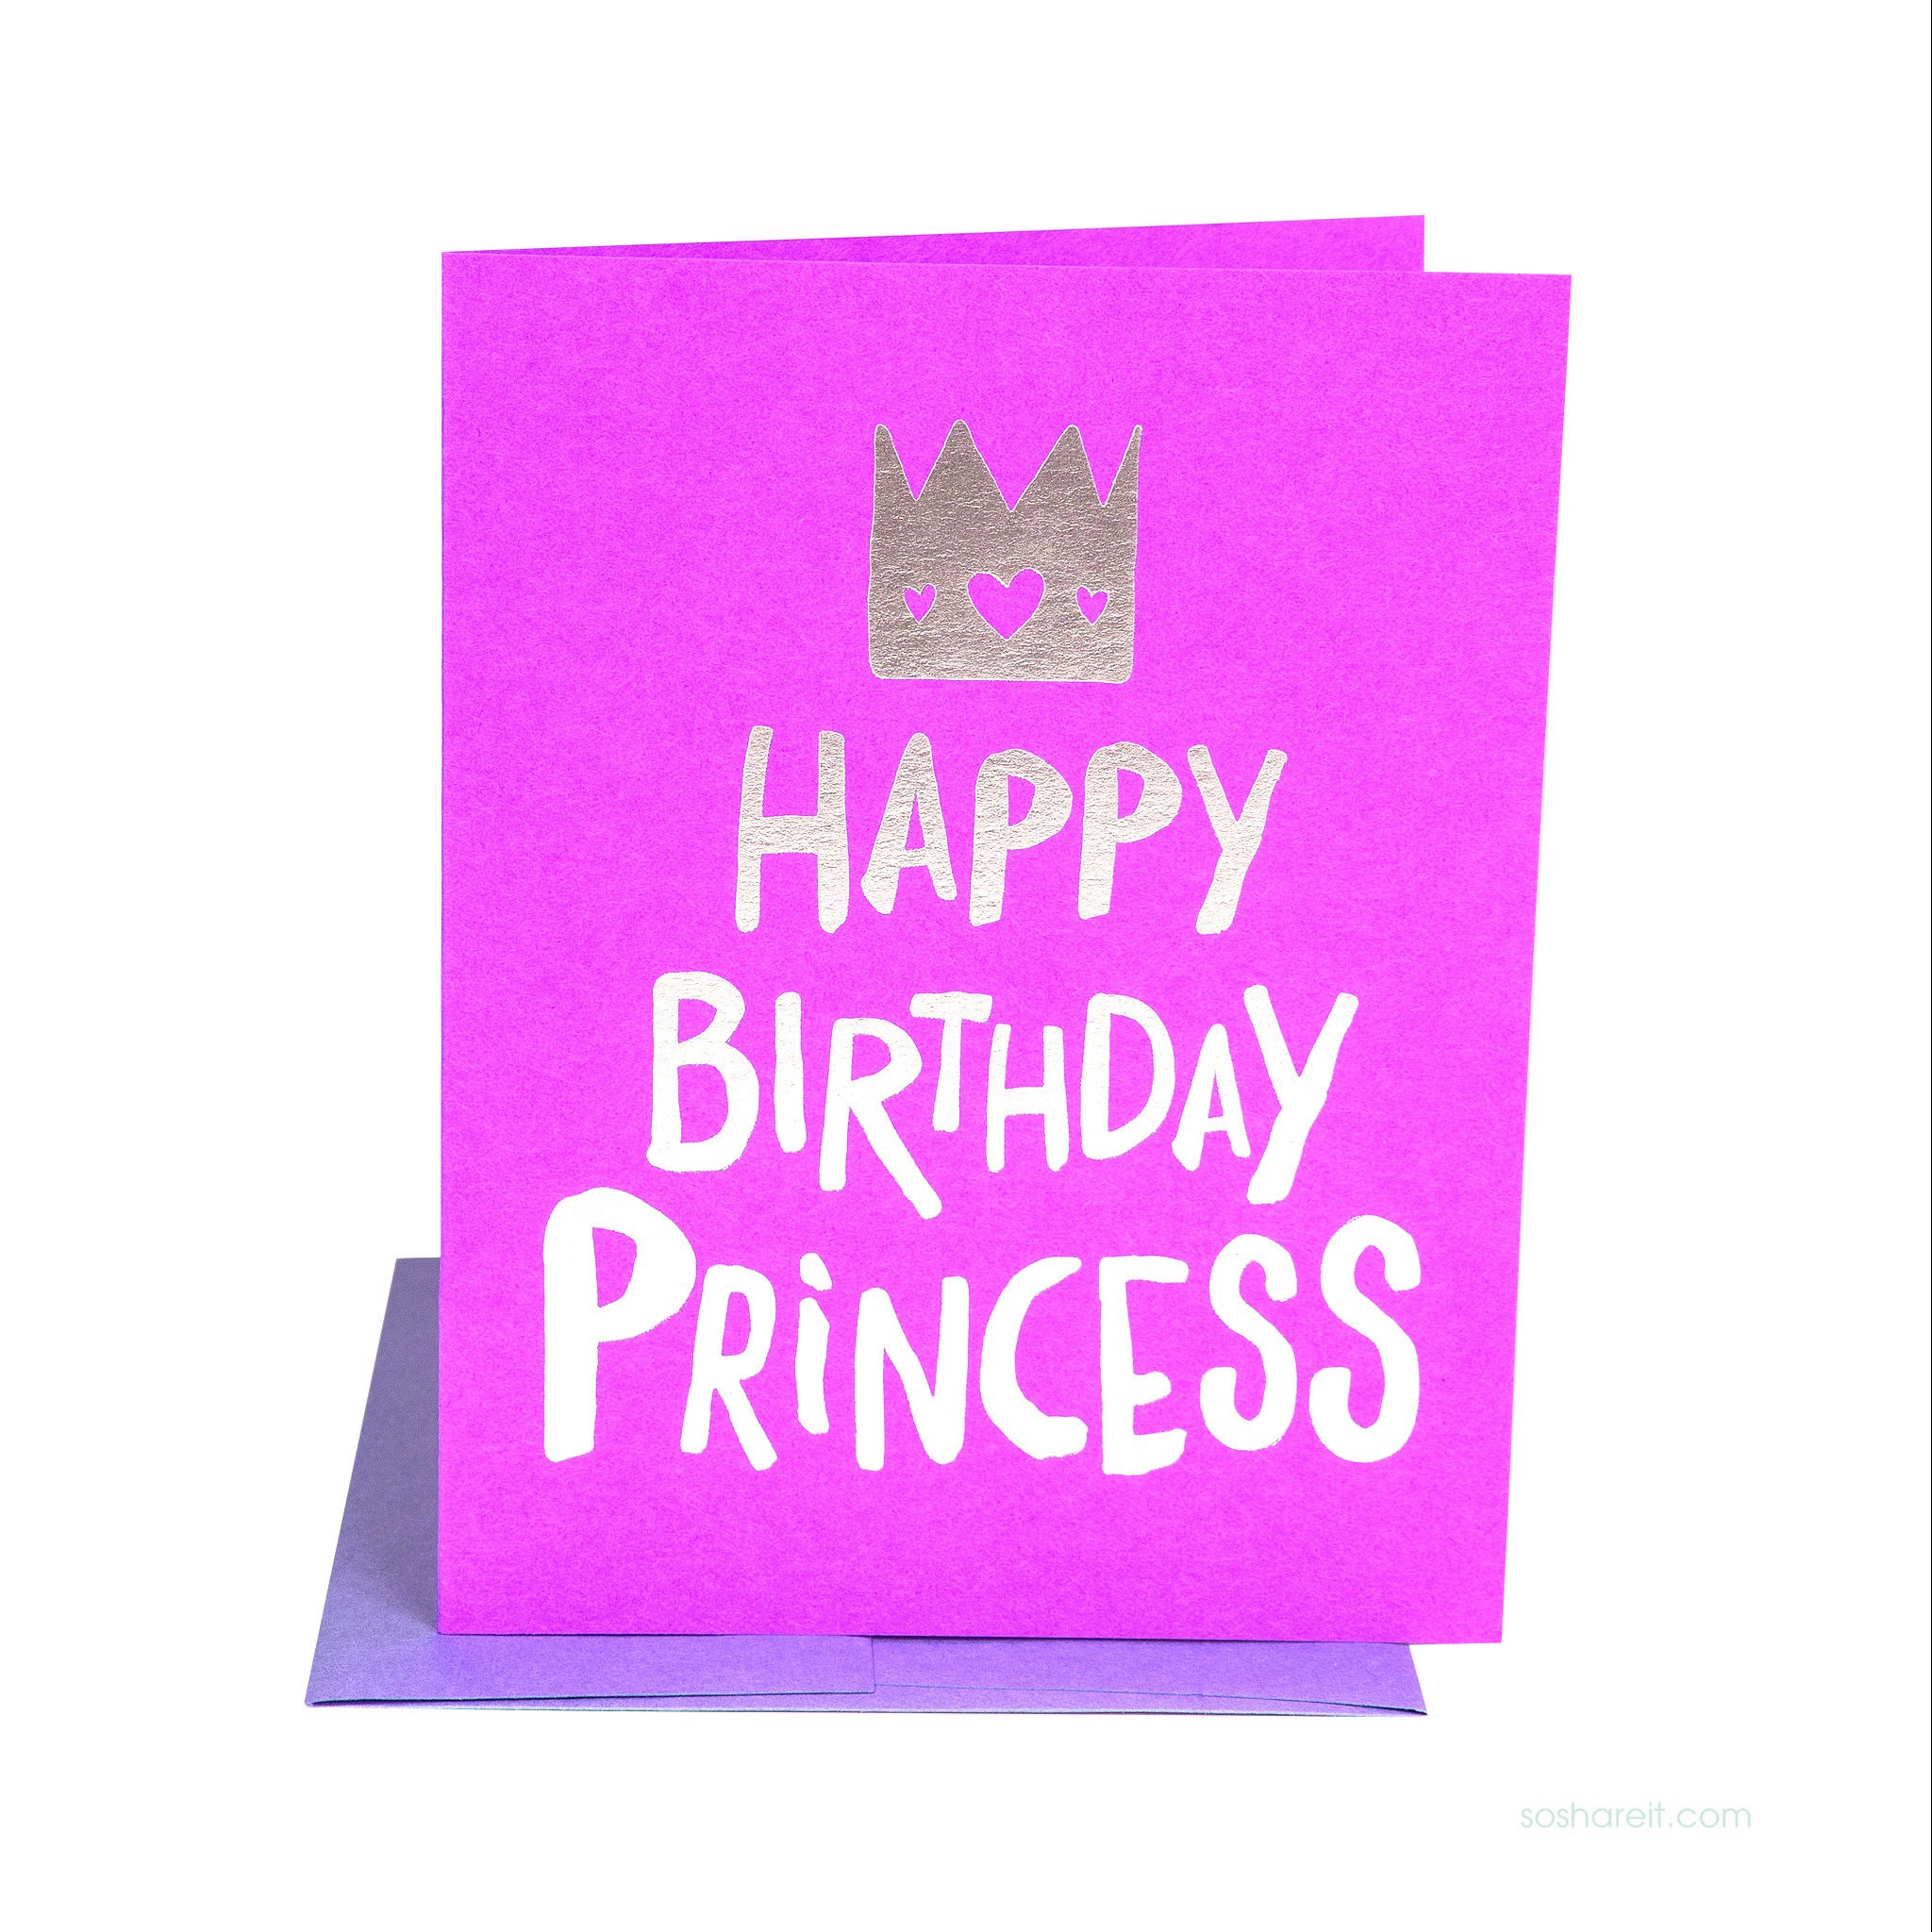 Happy Birthday Princess Quotes .soshareit.com